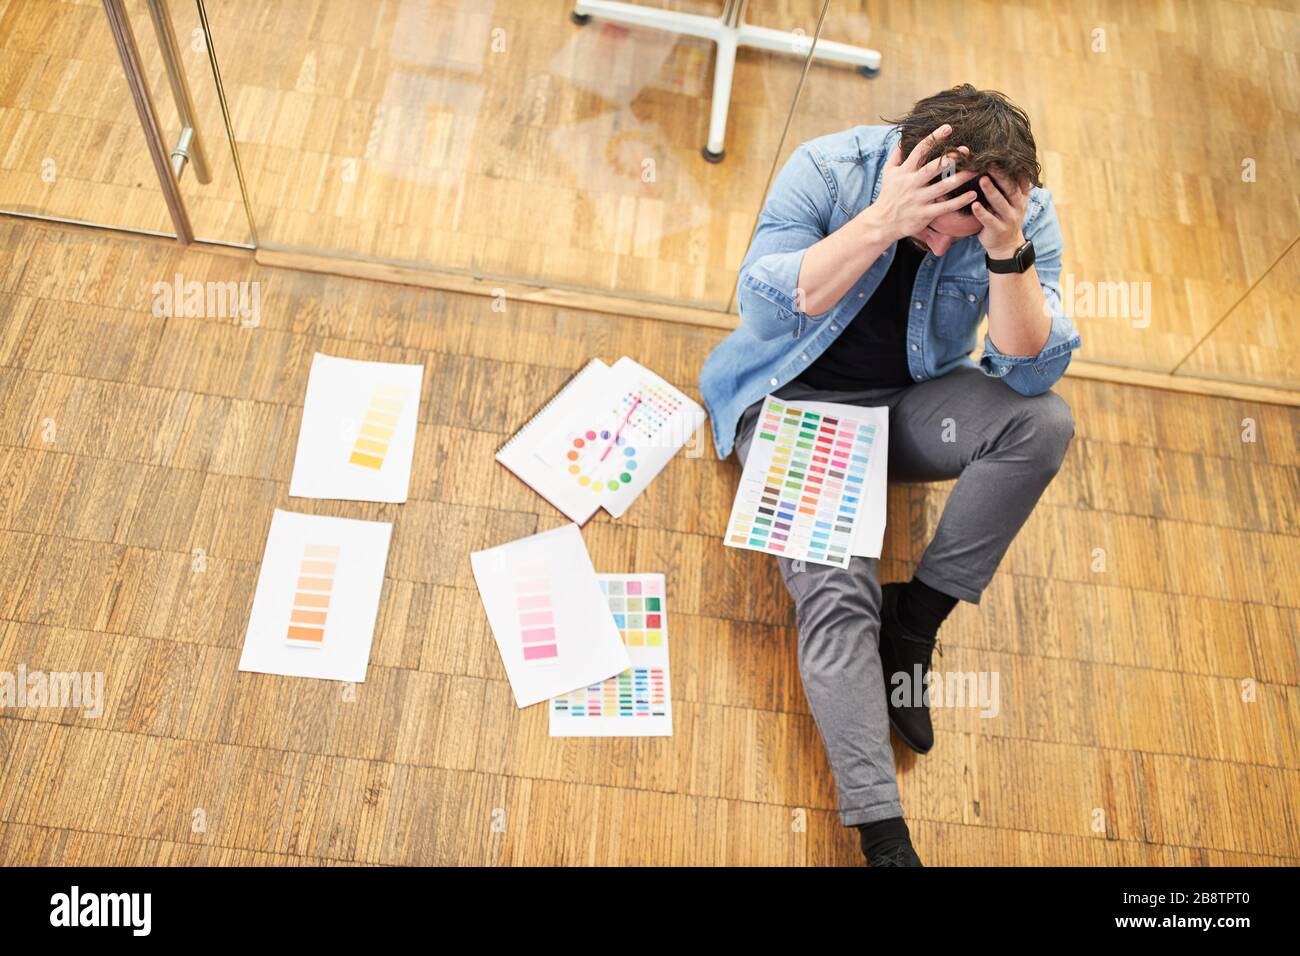 Desperate web designer or graphic designer with a headache or burnout Stock Photo